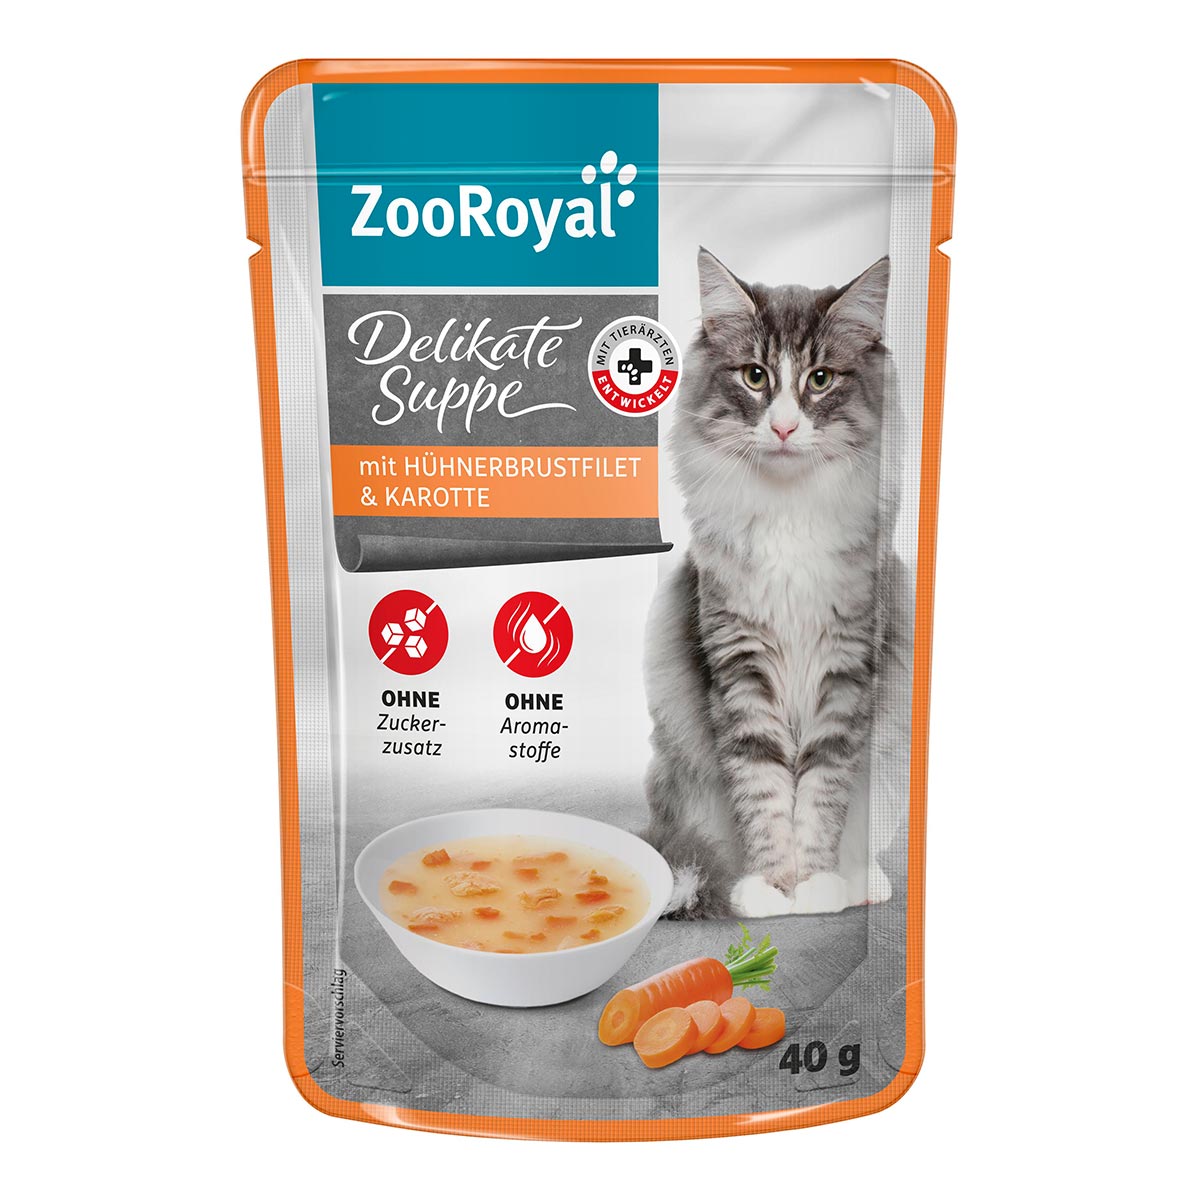 ZooRoyal Delikate Suppe Hühnerbrustfilet und Karotte 16x40g von ZooRoyal